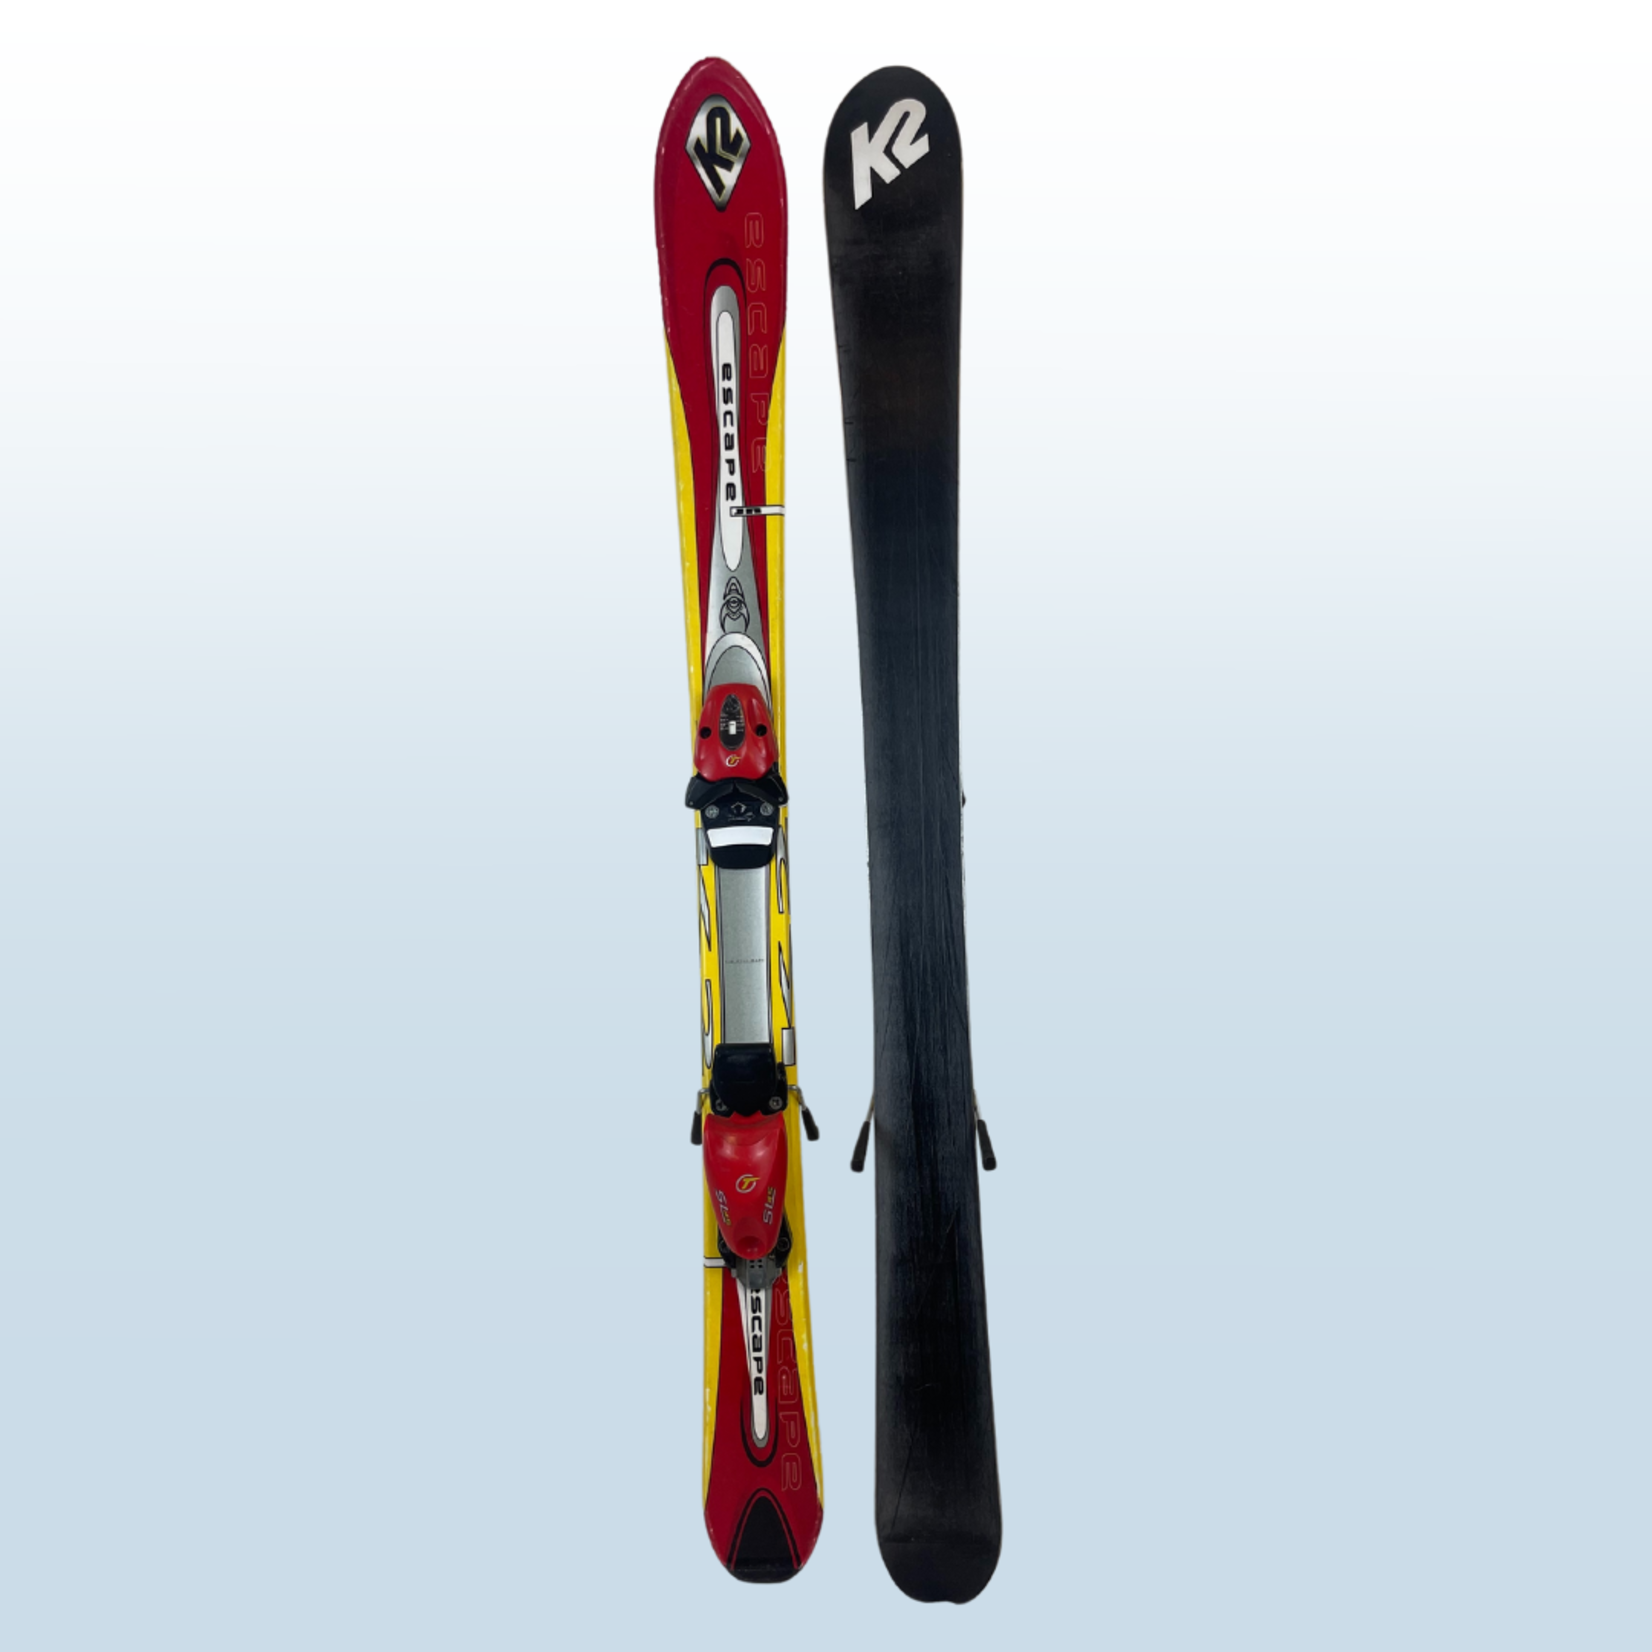 K2 K2 Escape Kids Skis, Size 120cm